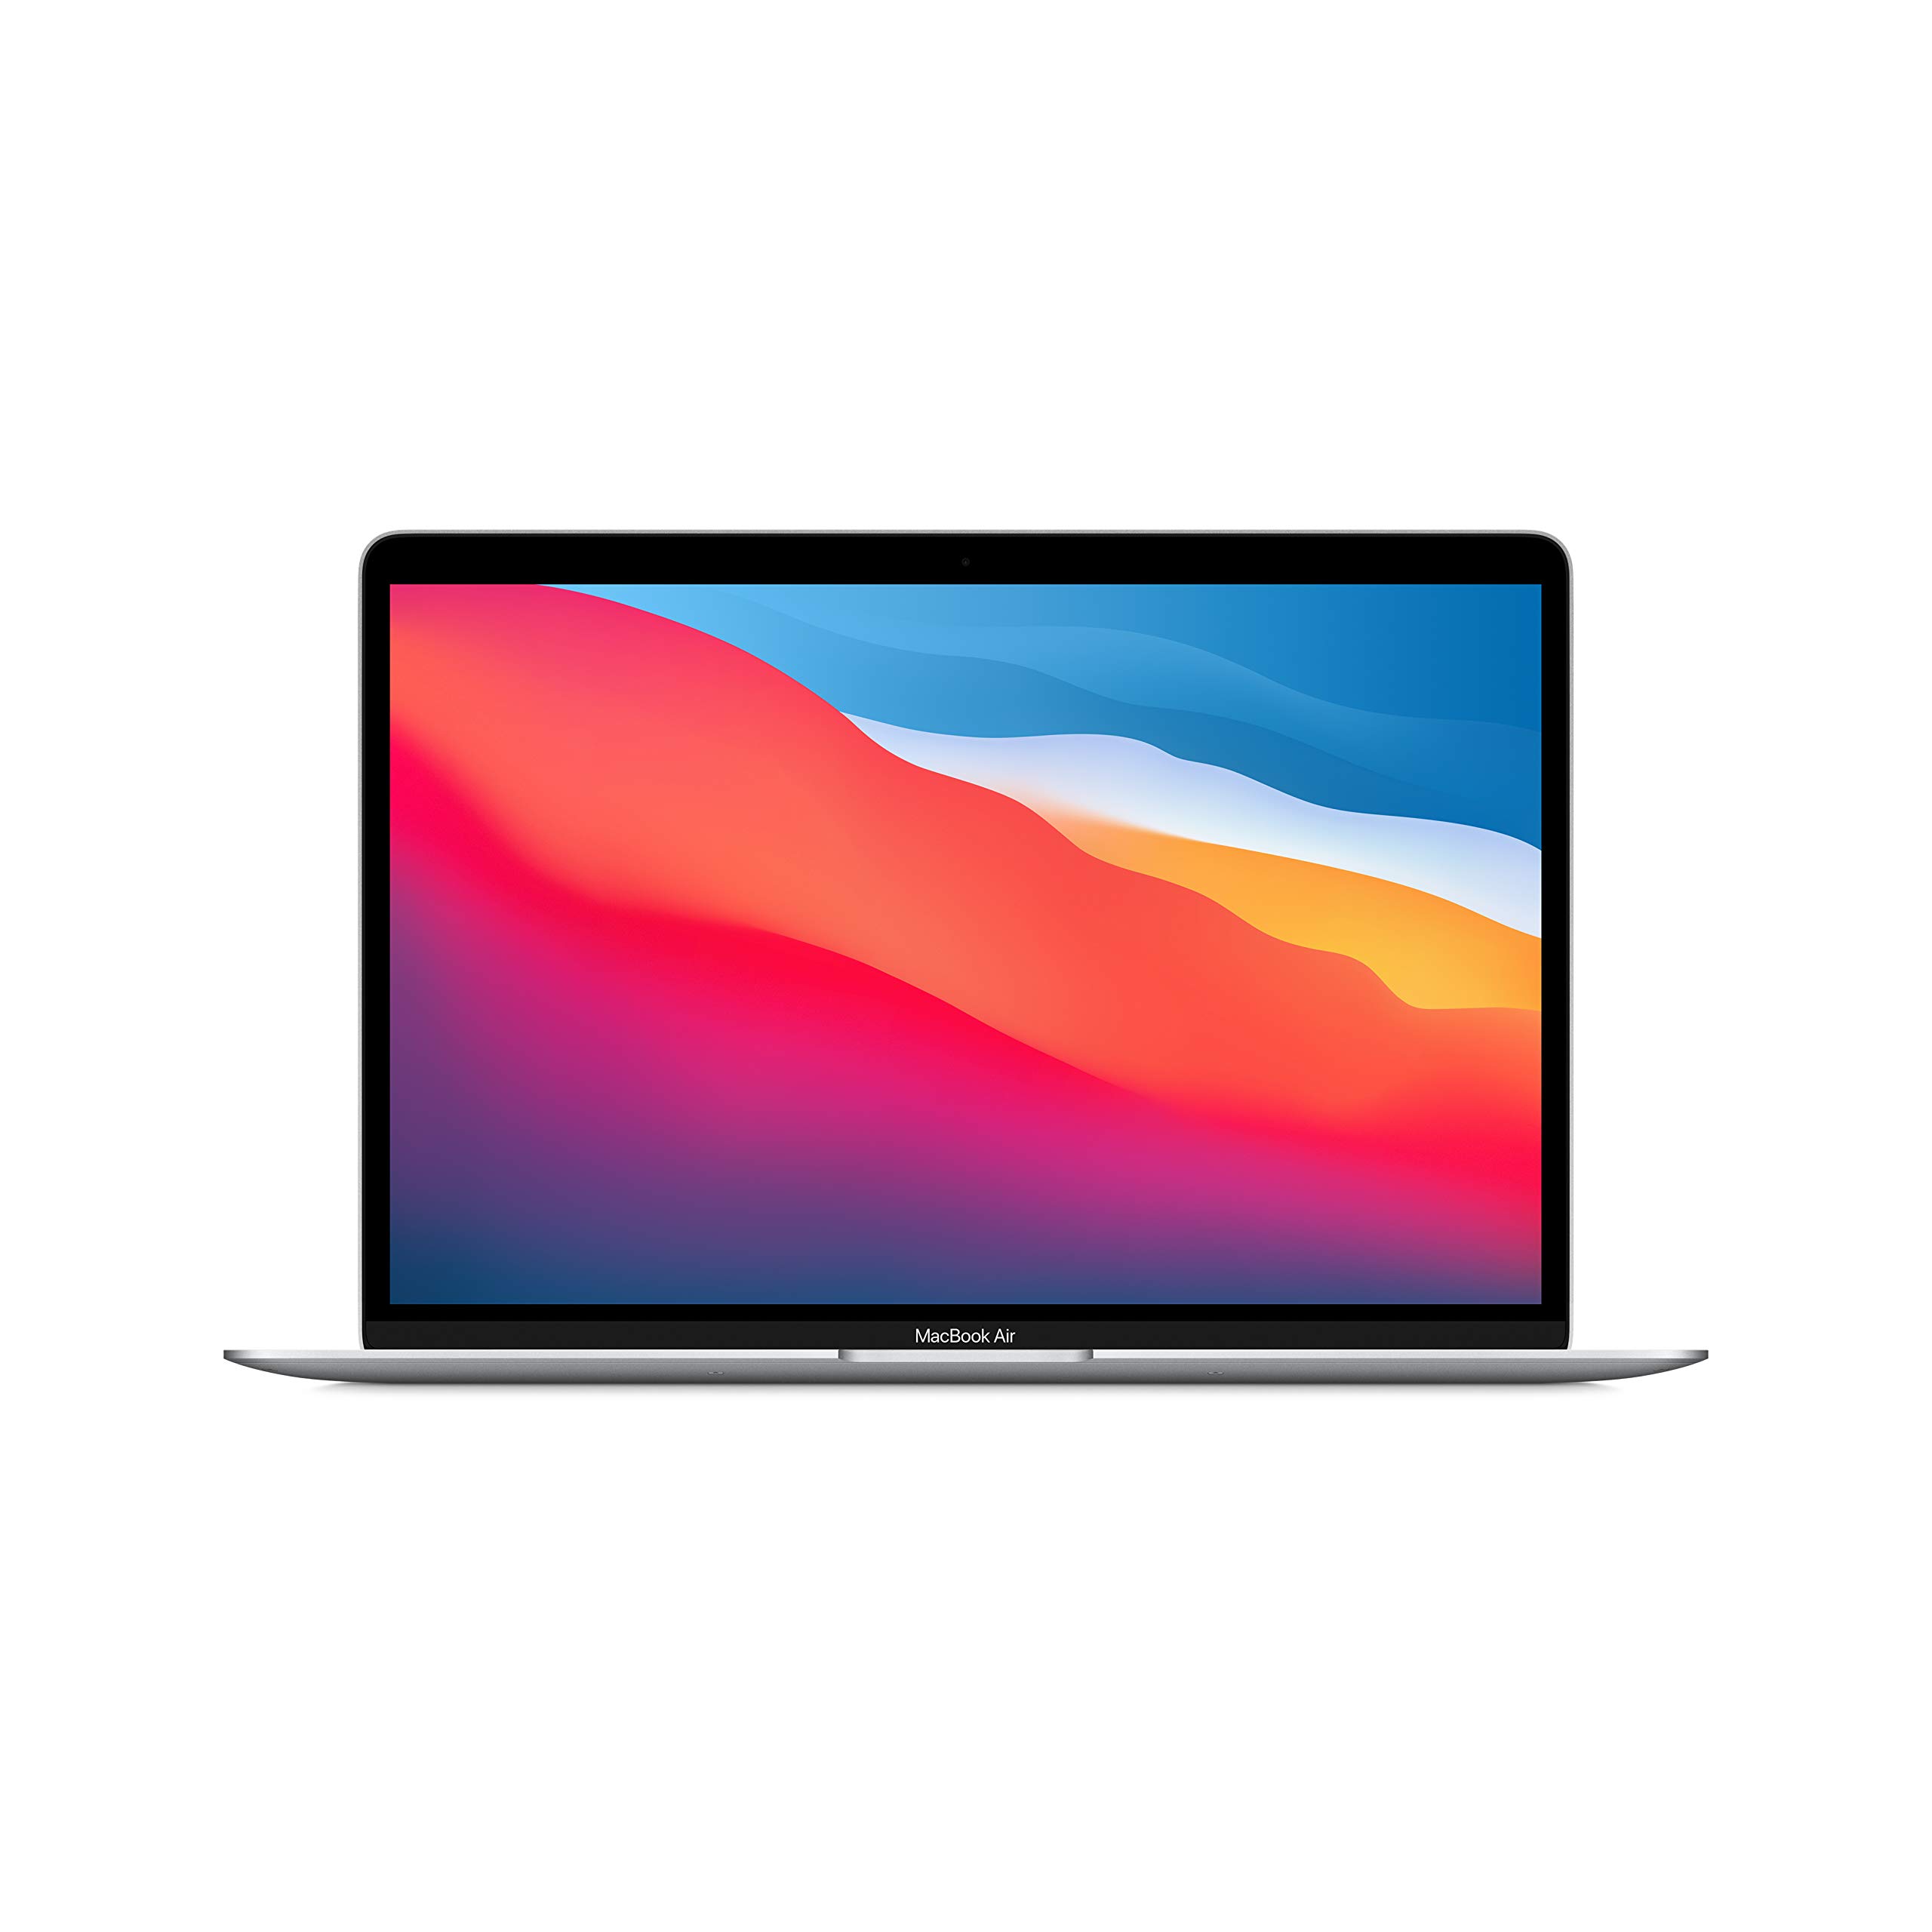 Apple 2020 MacBook Air Laptop M1 Chip, 13" Retina Display $799.99